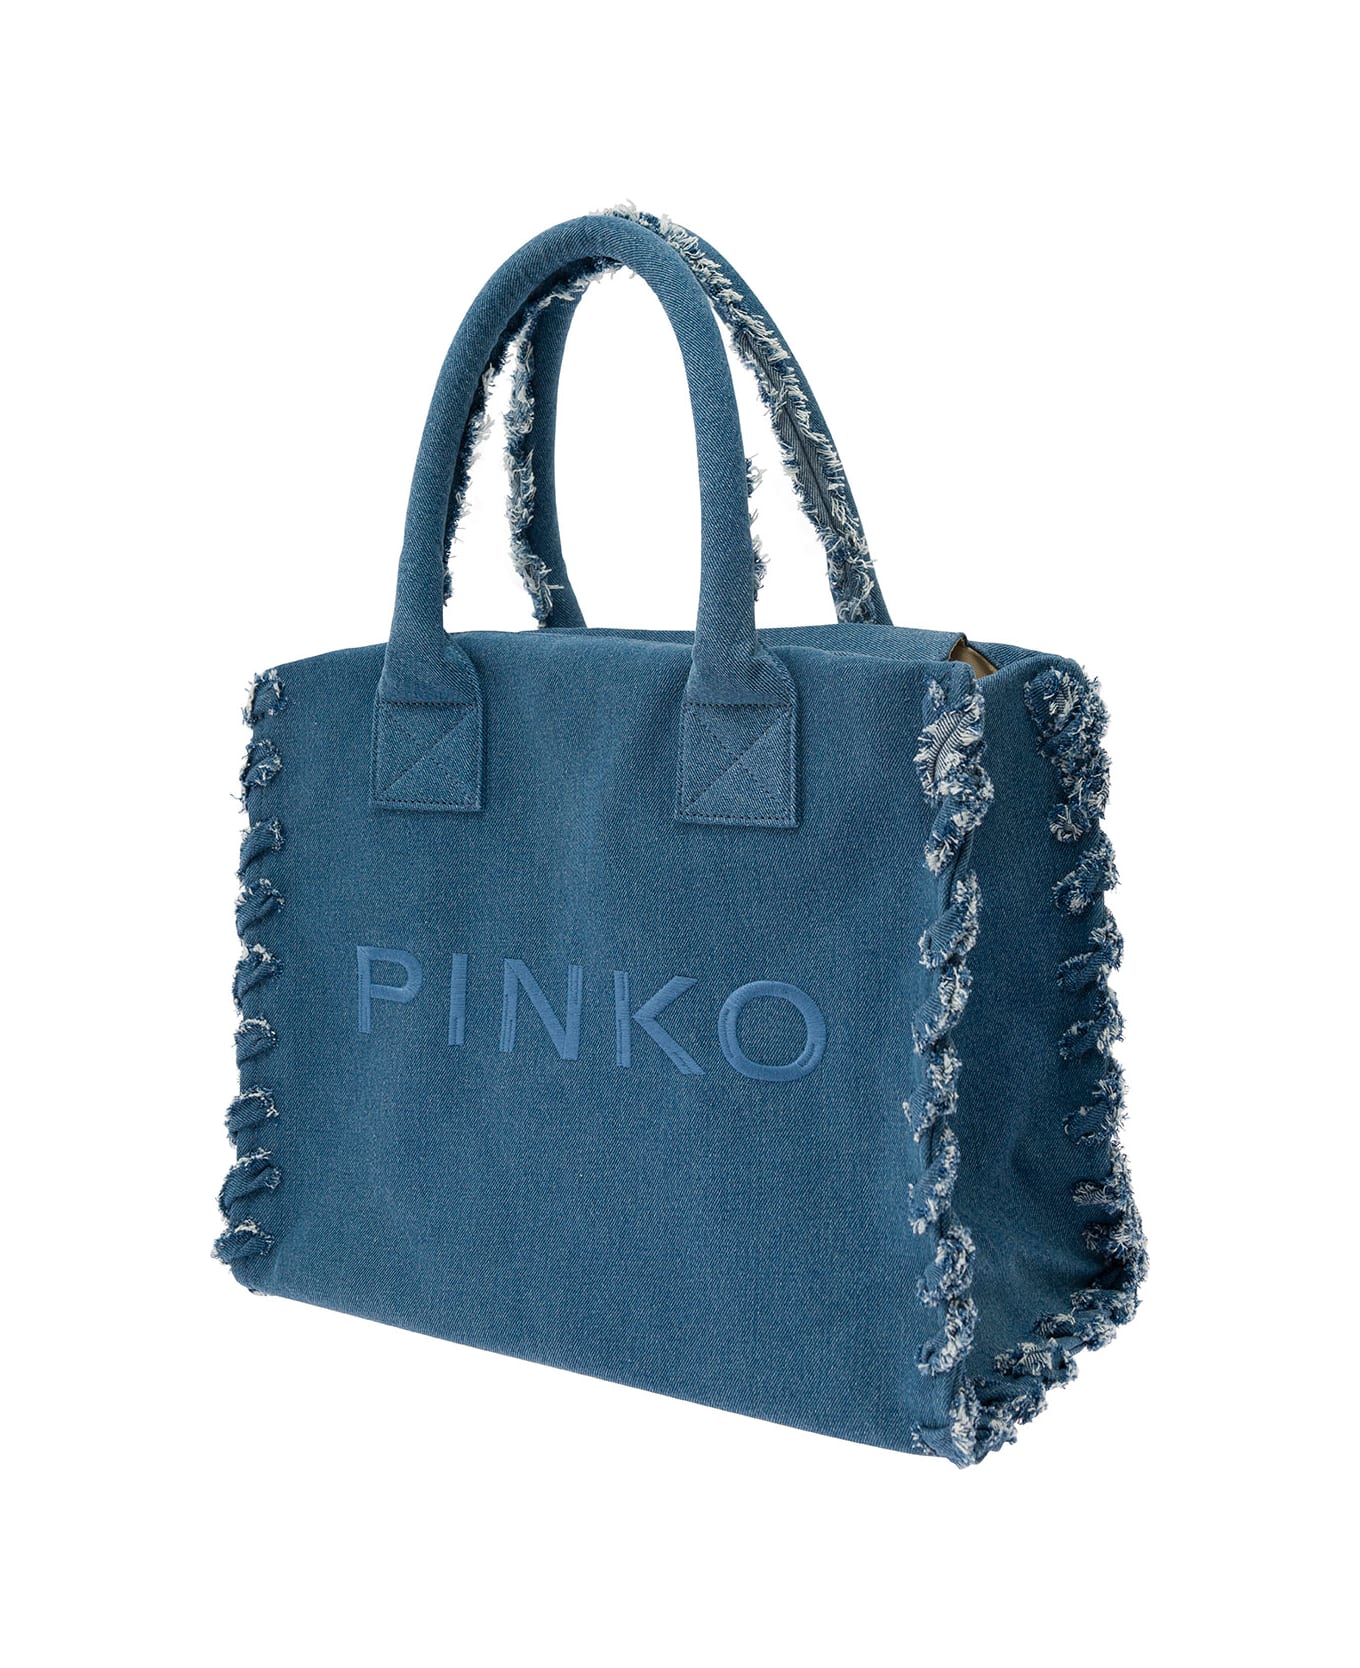 Pinko Cotton Denim Tote Bag With Logo - Denim